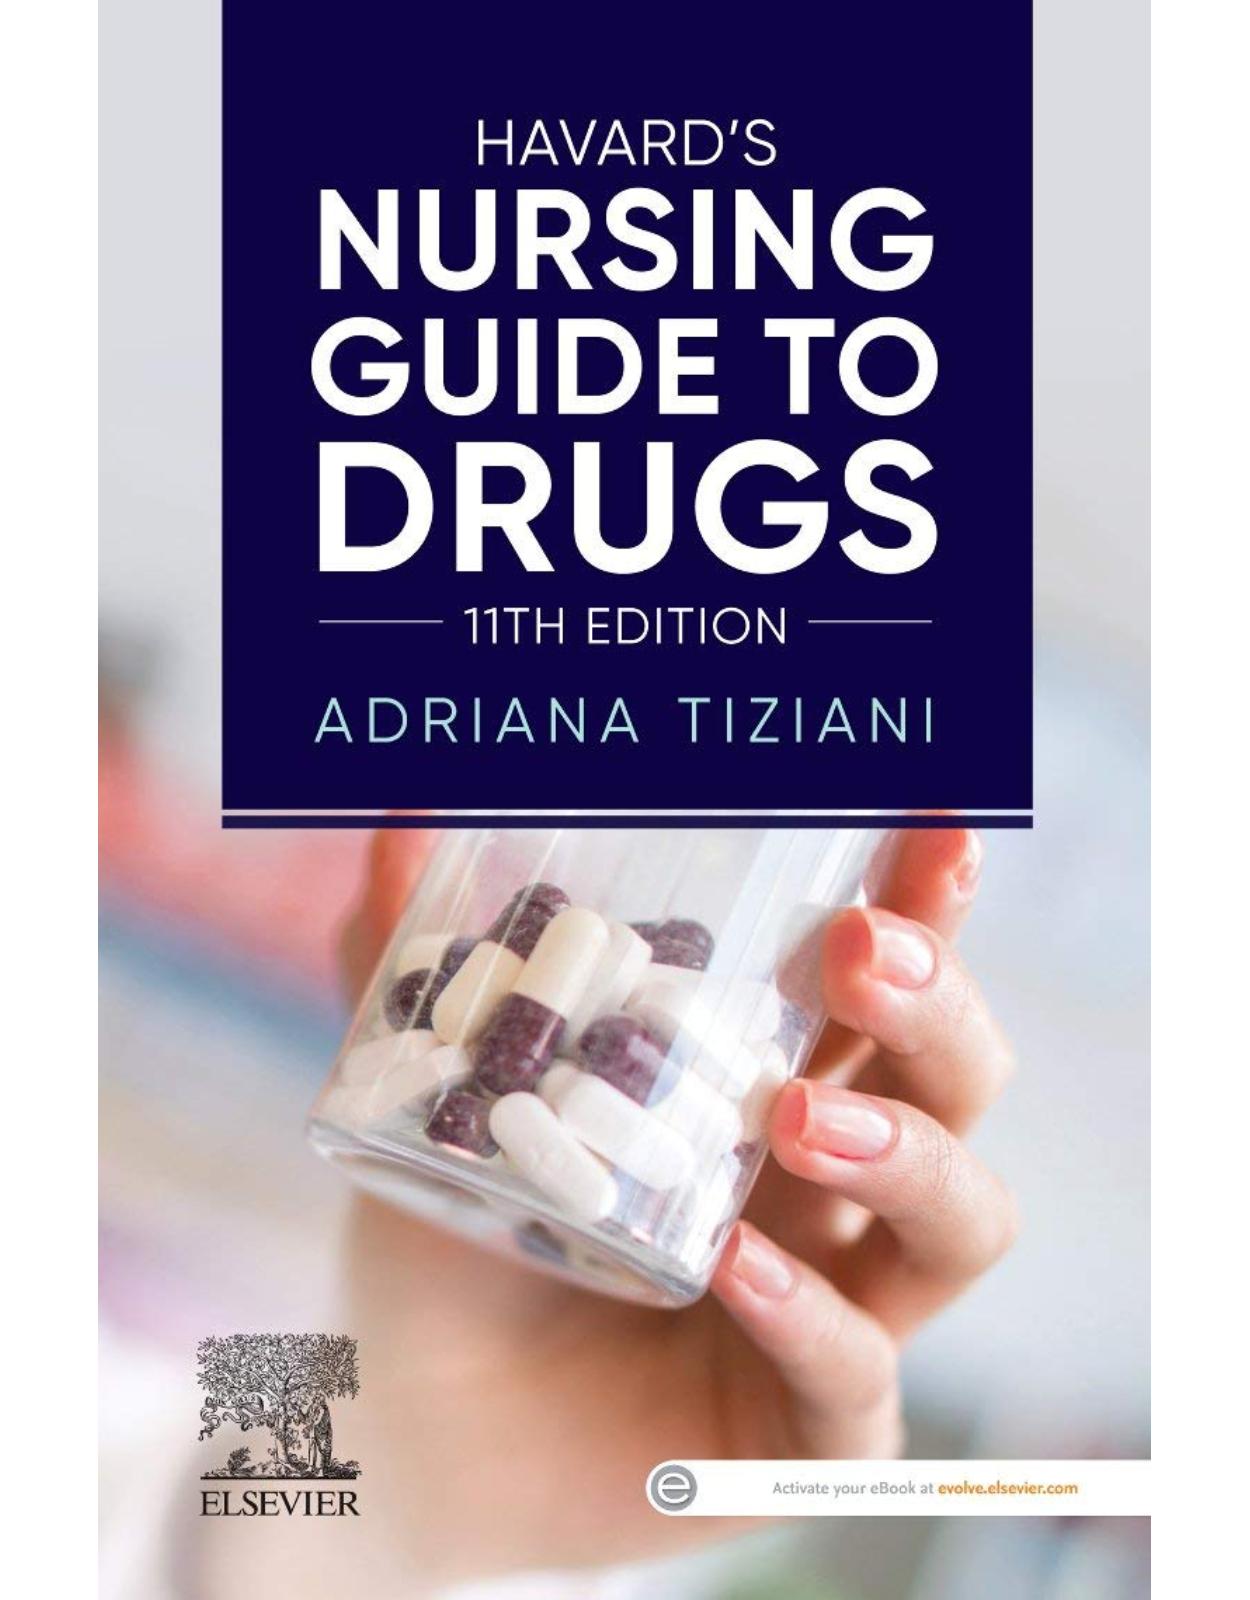 Havard’s Nursing Guide to Drugs